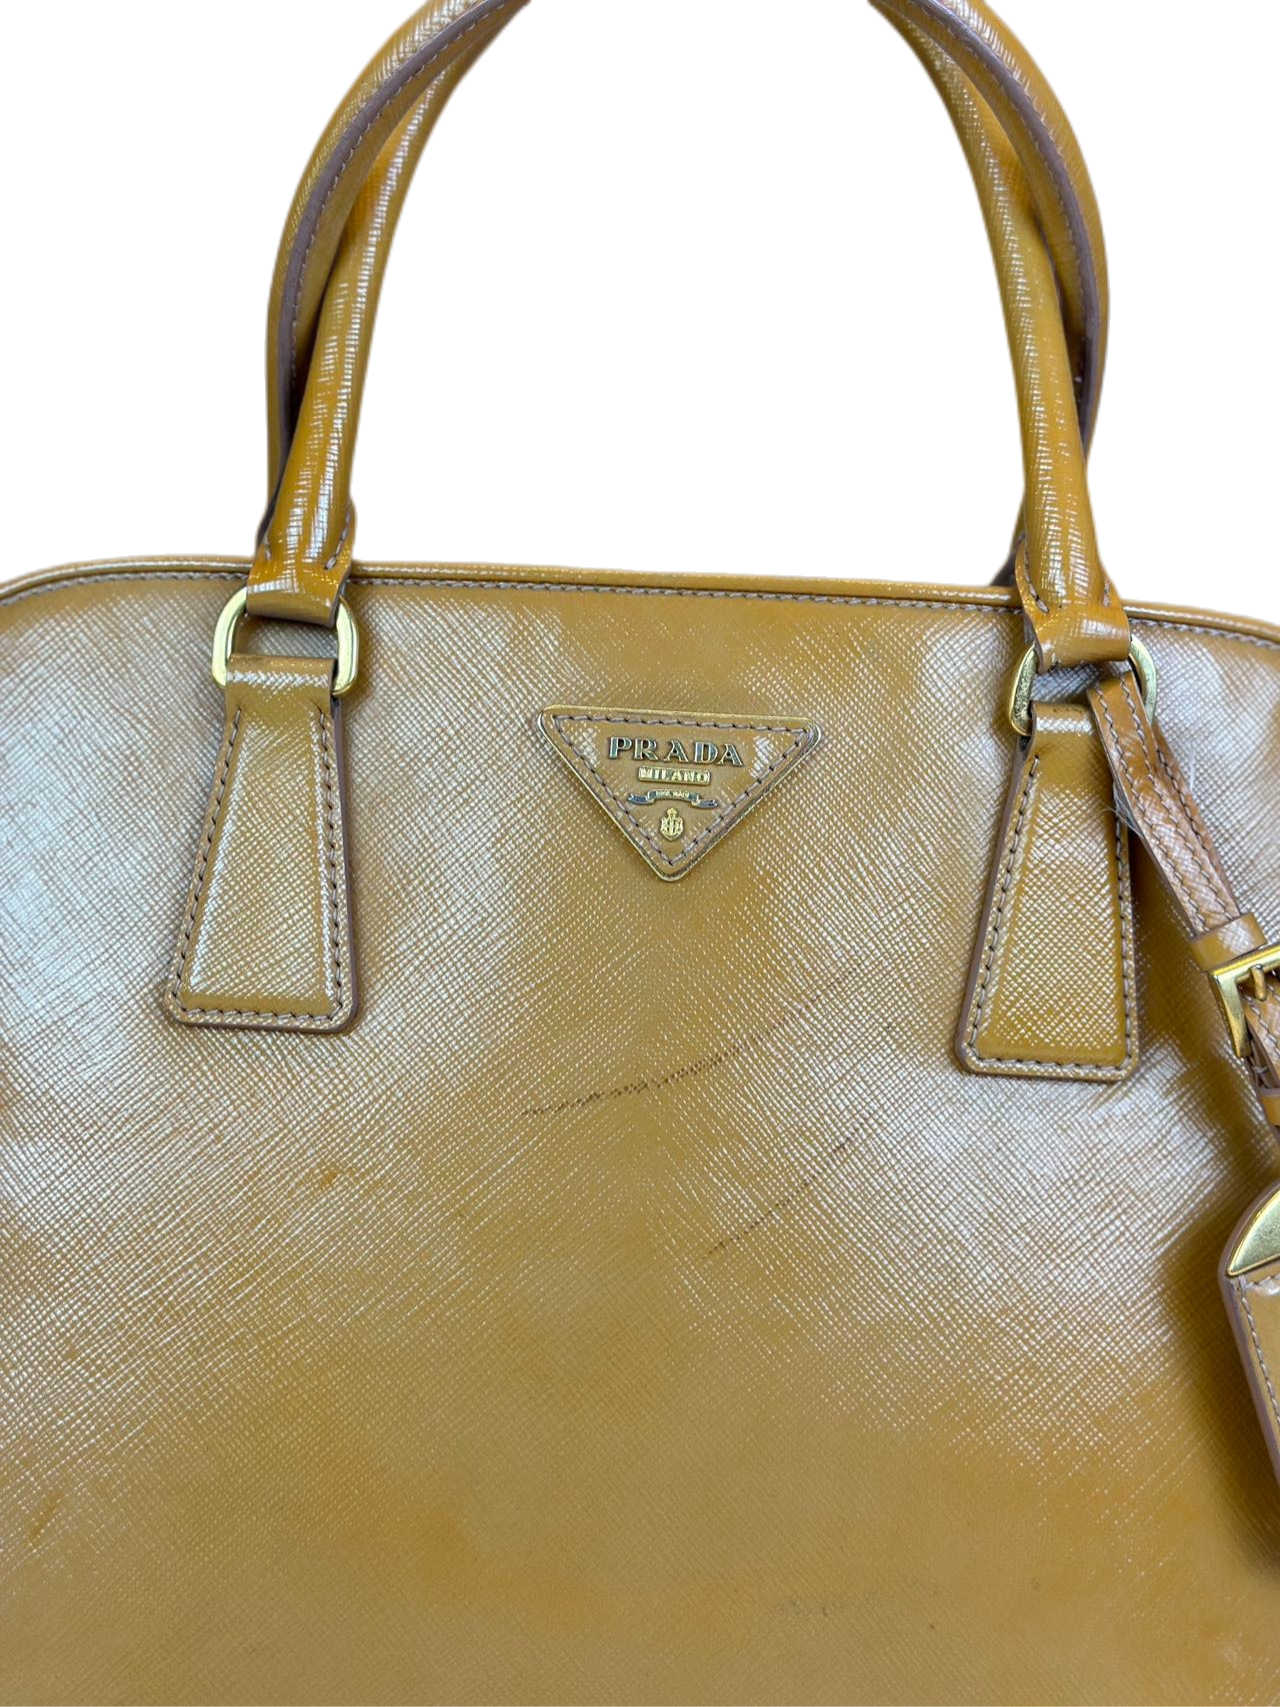 Preloved Prada Patent Leather Shoulder Bag Crossbody